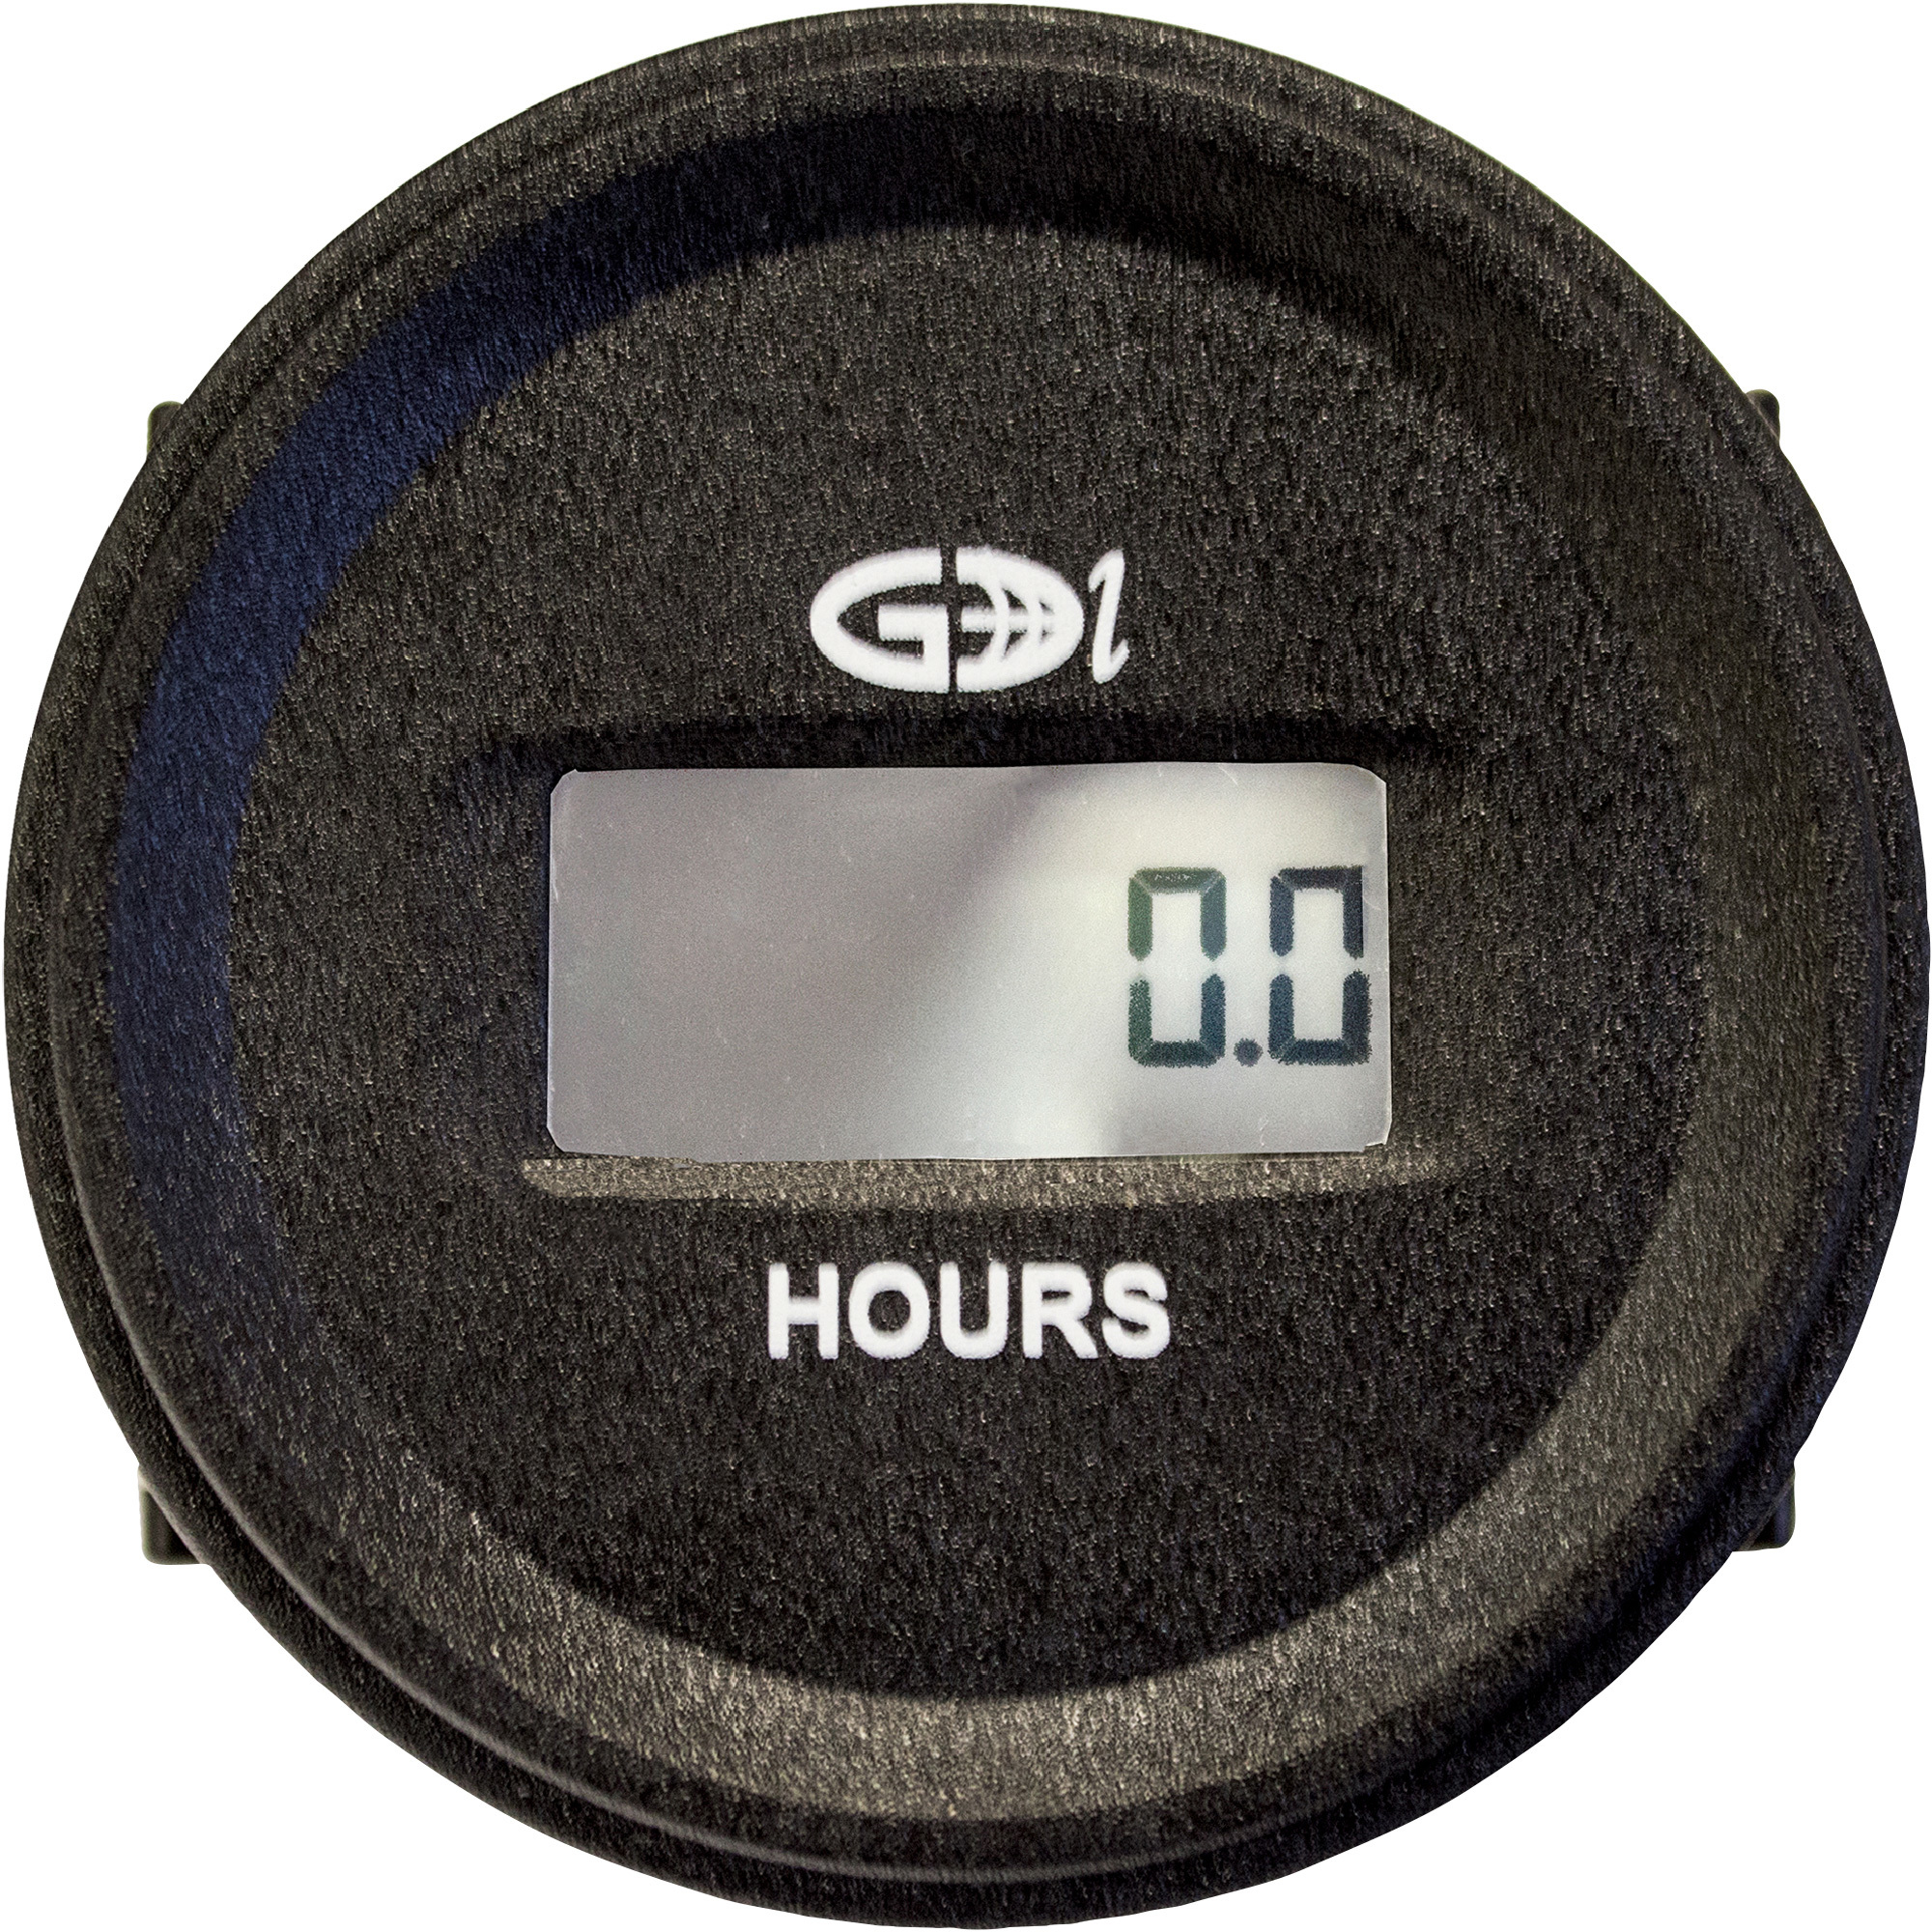 GDI Round Hour Meter with Retainer Clip â 2Inch, Model N530-0200-8111